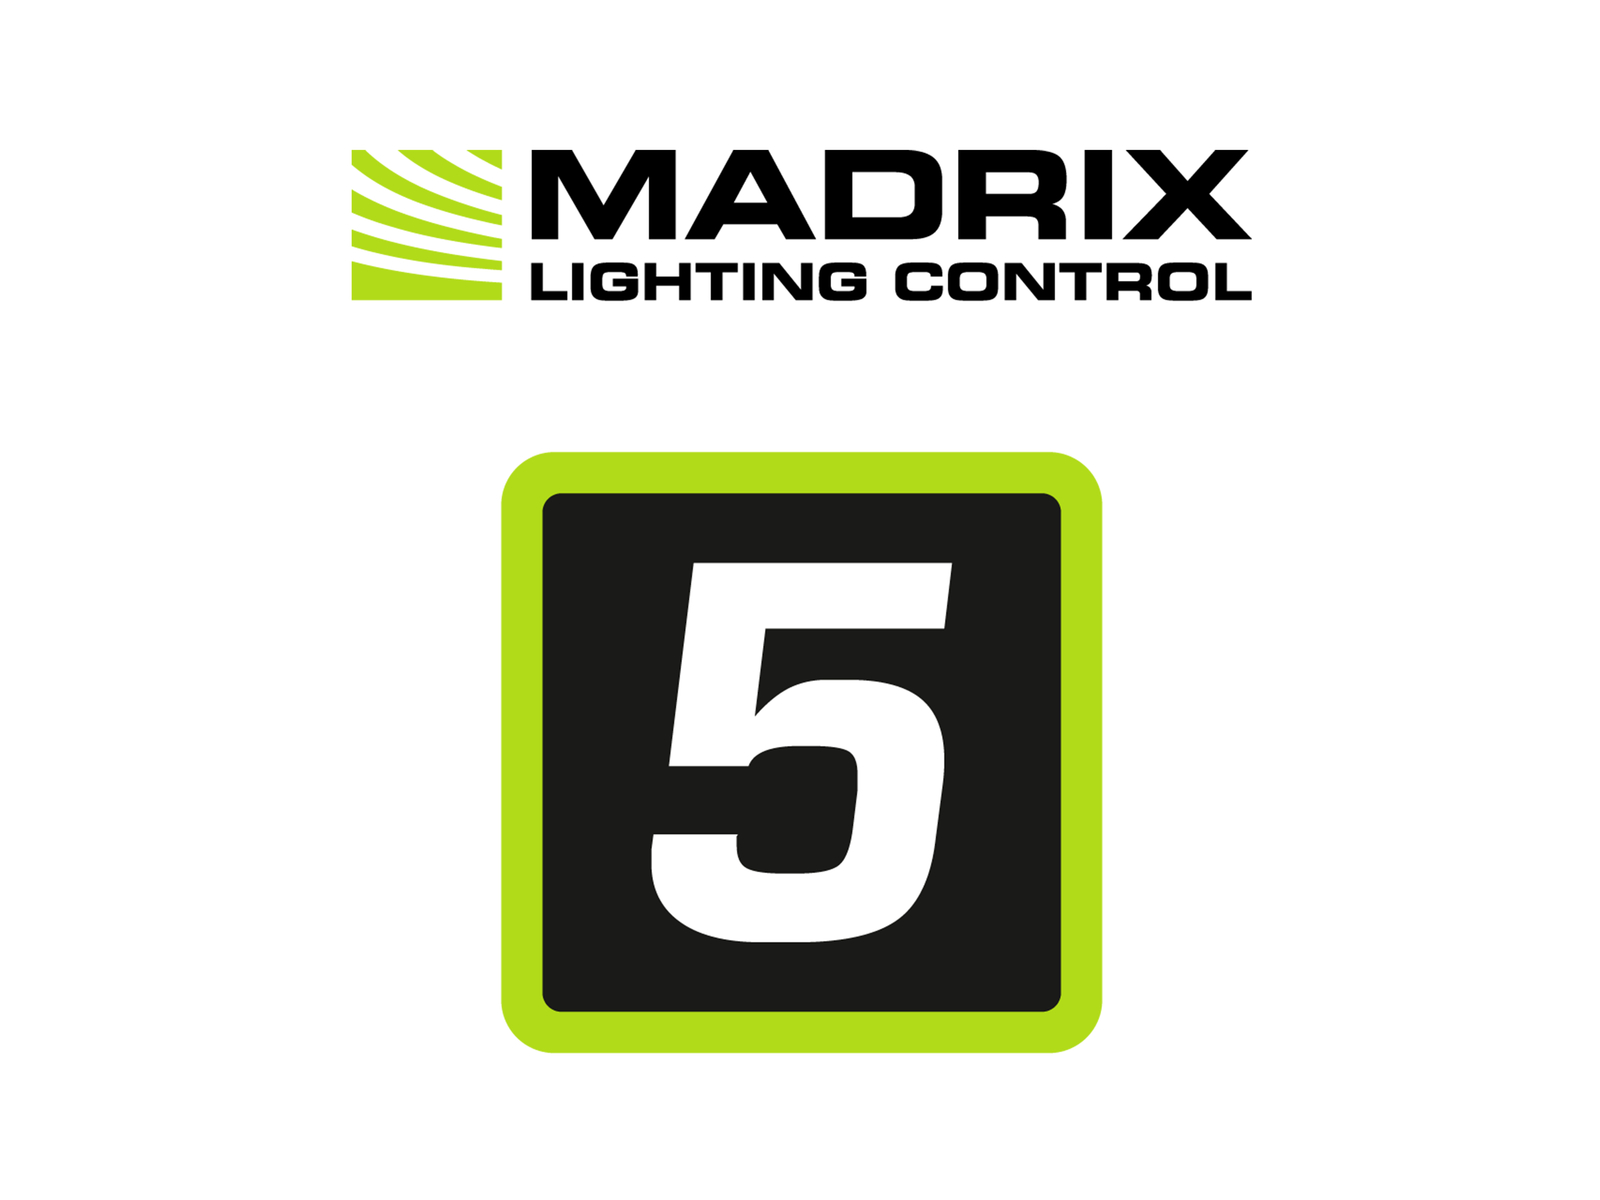 MADRIX Software 5 Lizenz entry